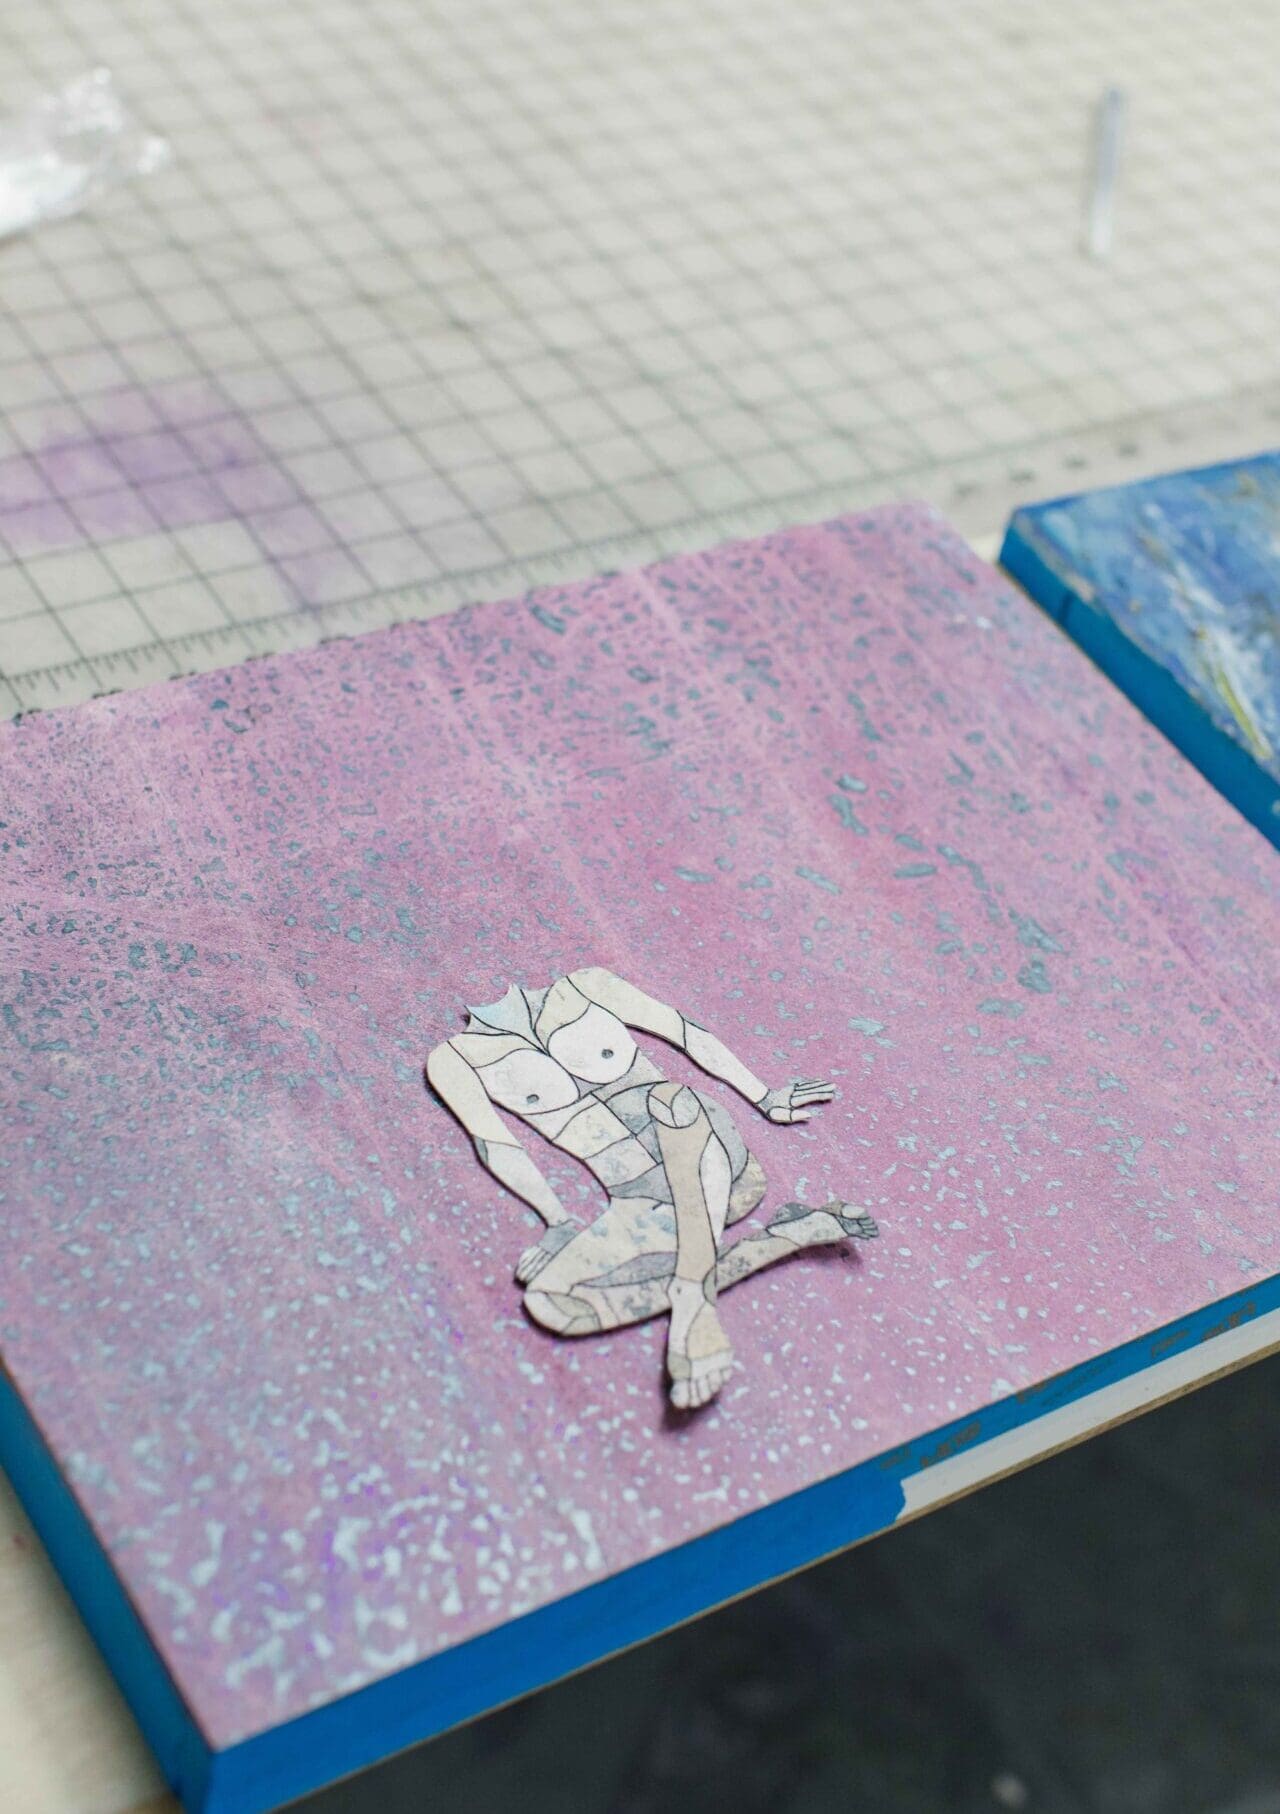 Felipe Baeza | A small collage work of a sitting torso on a purple block inside Felipe Baeza's studio